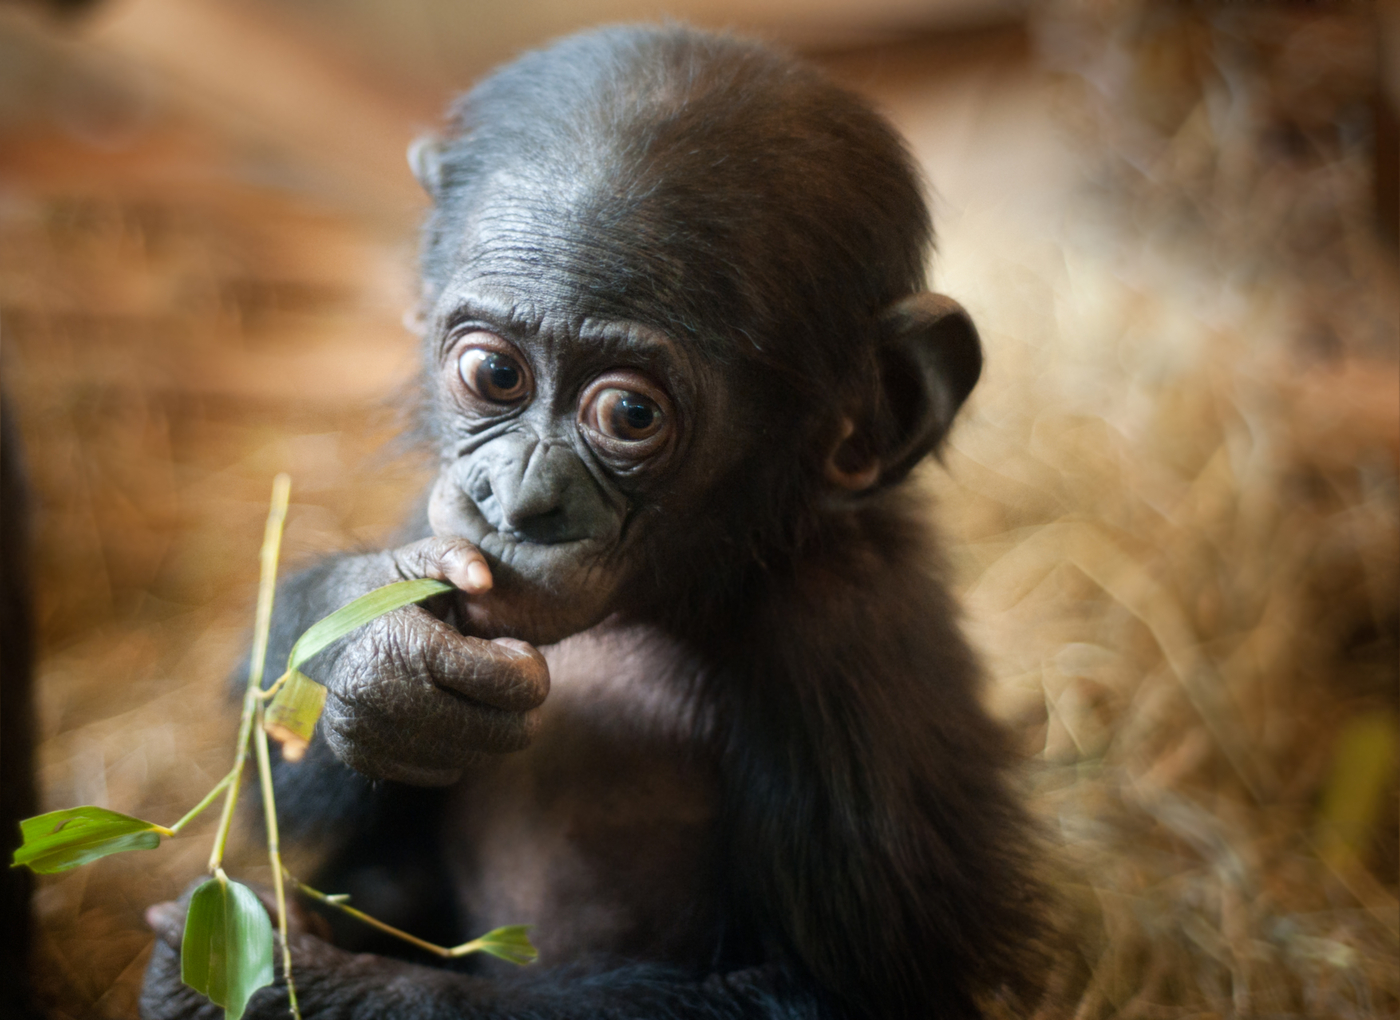 Baby Bonobo monkey (Pan paniscus). Photo ID 14658221 © Eric Gevaert | Dreamstime.com